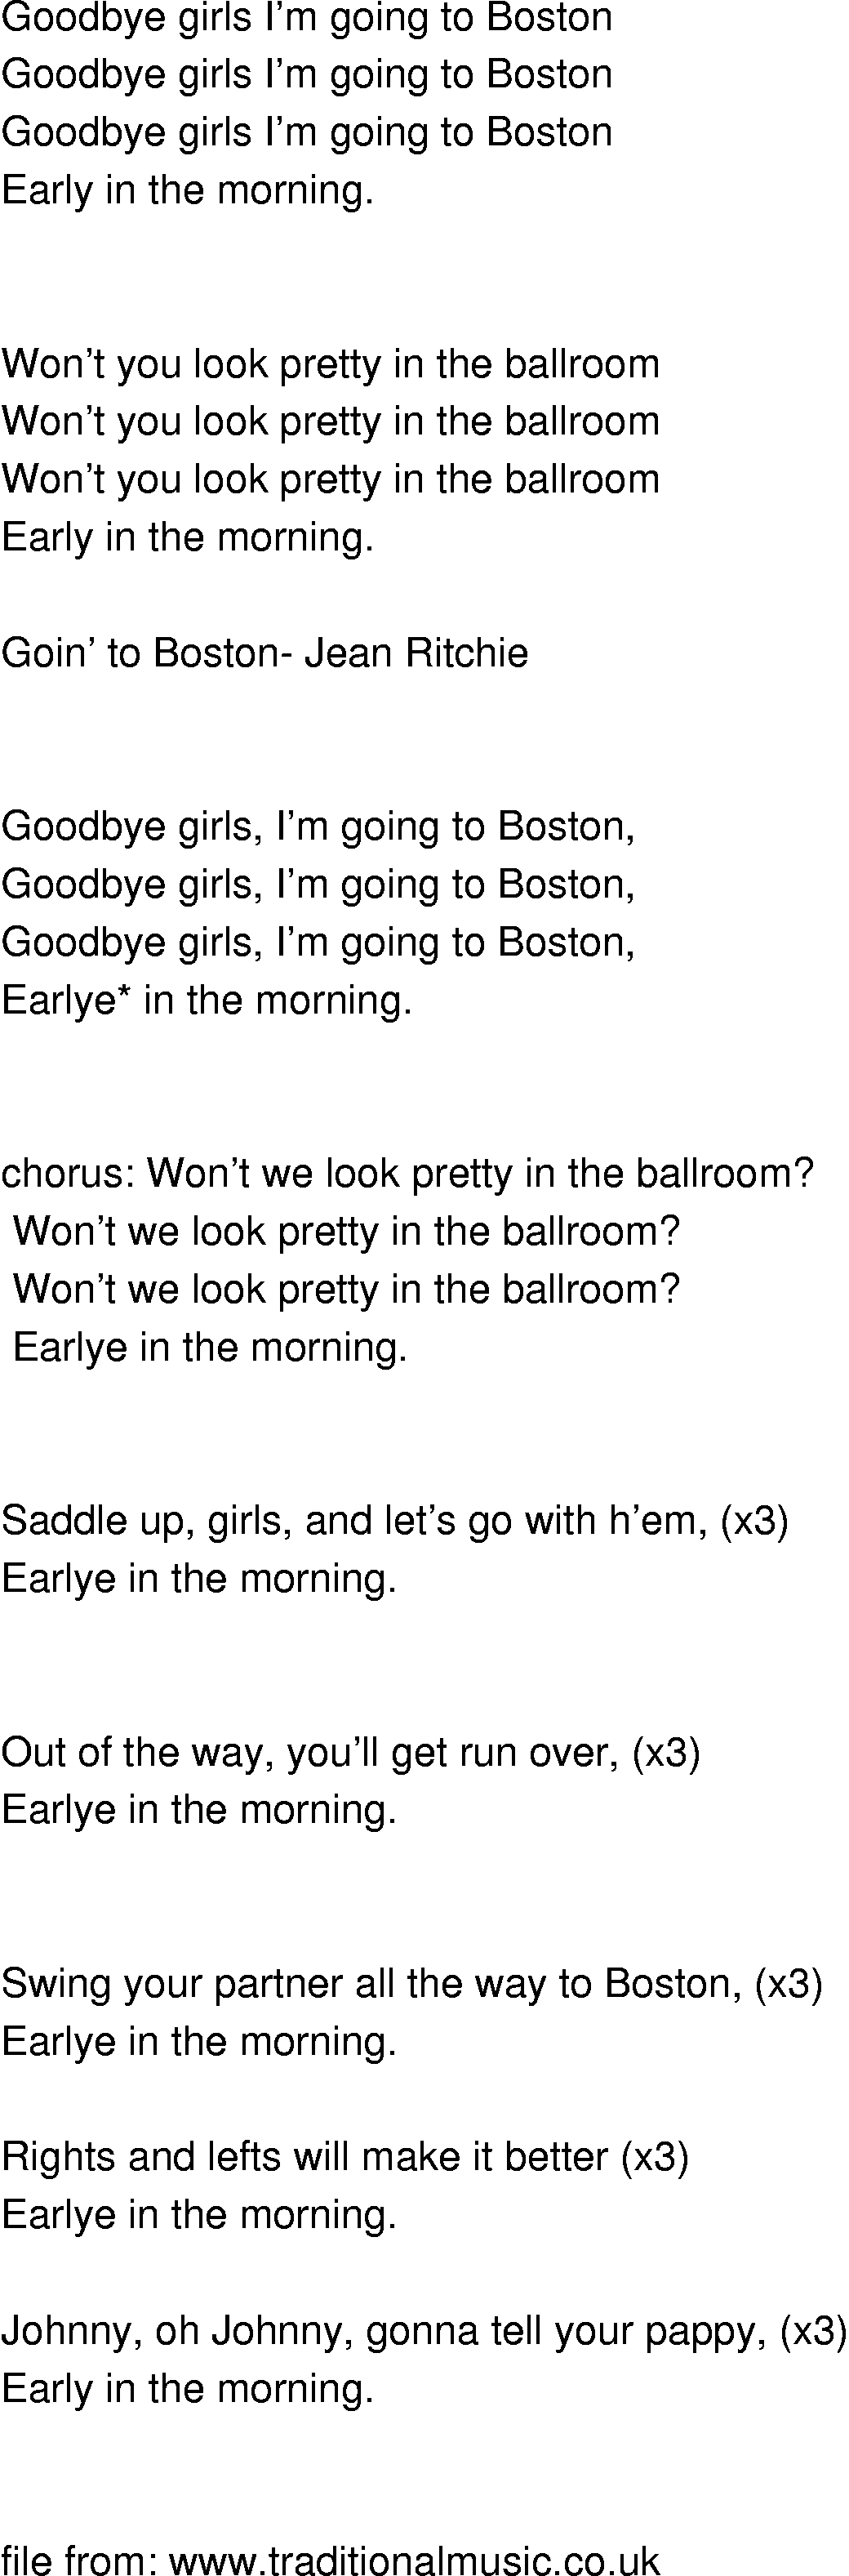 Old-Time (oldtimey) Song Lyrics - going to boston